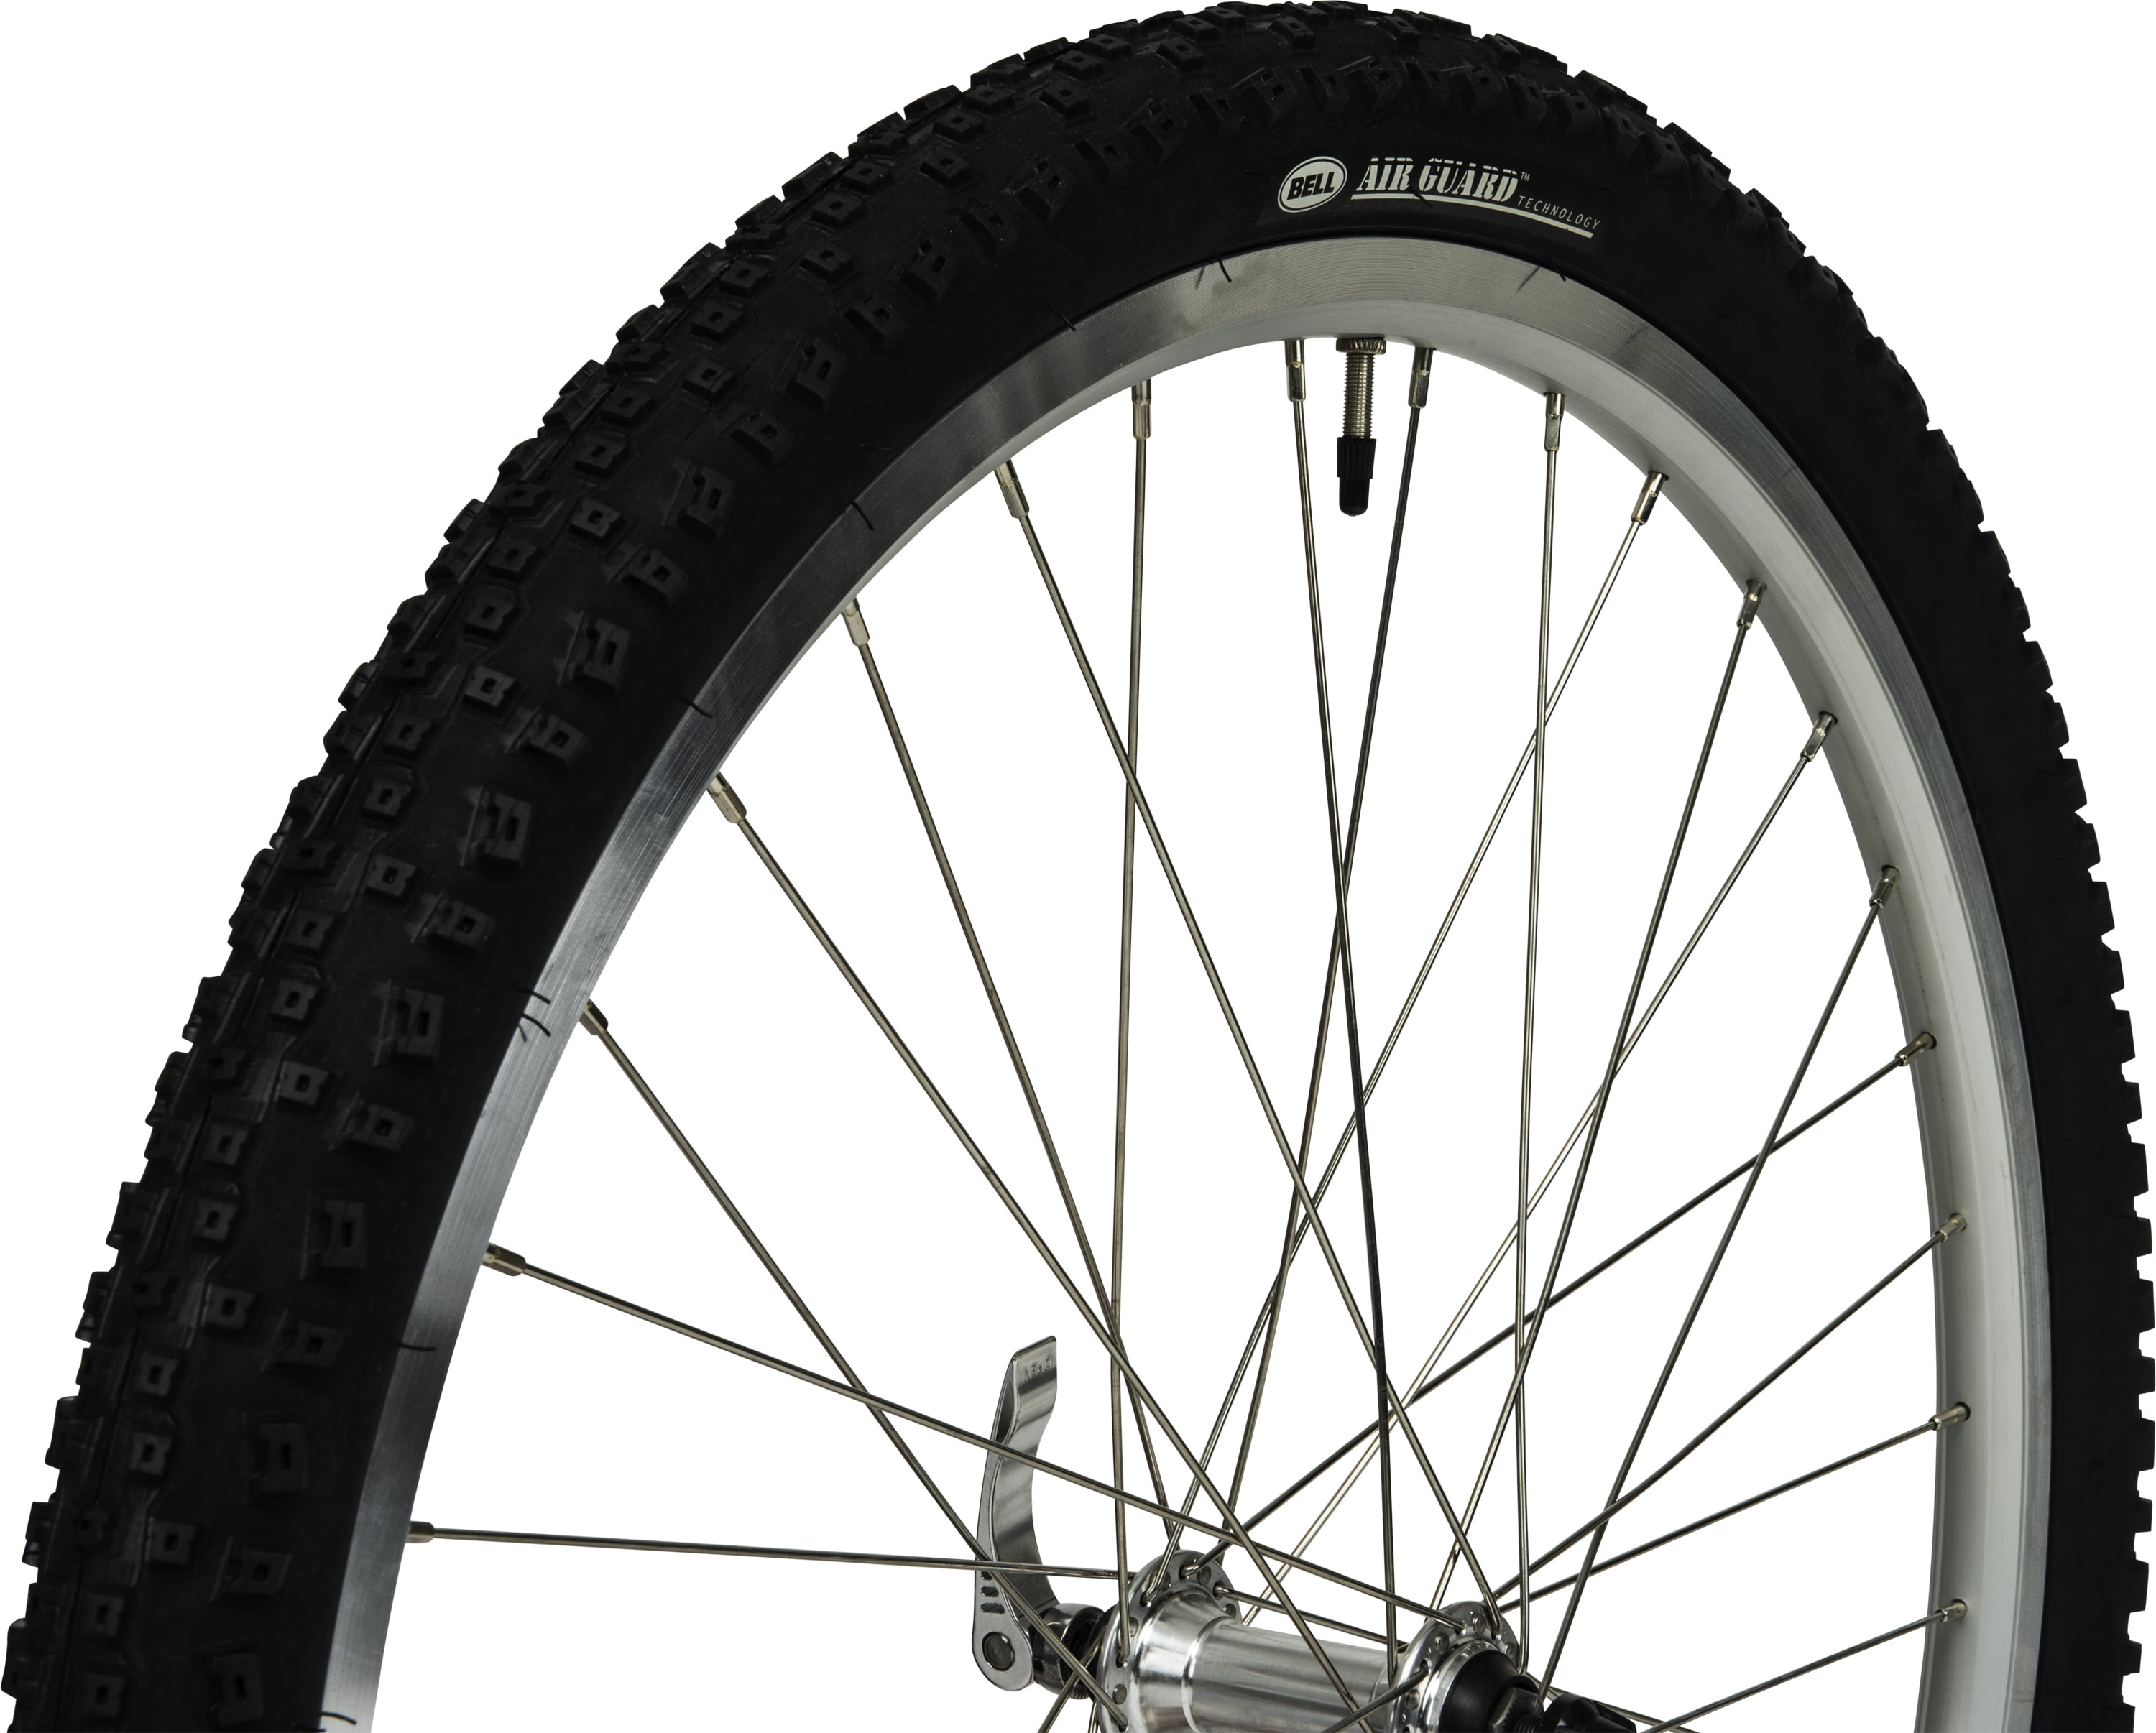 Bell Kids Bike Tire 16” X 2.125" Replaces 1.75” 2 pack 2.125” Black 